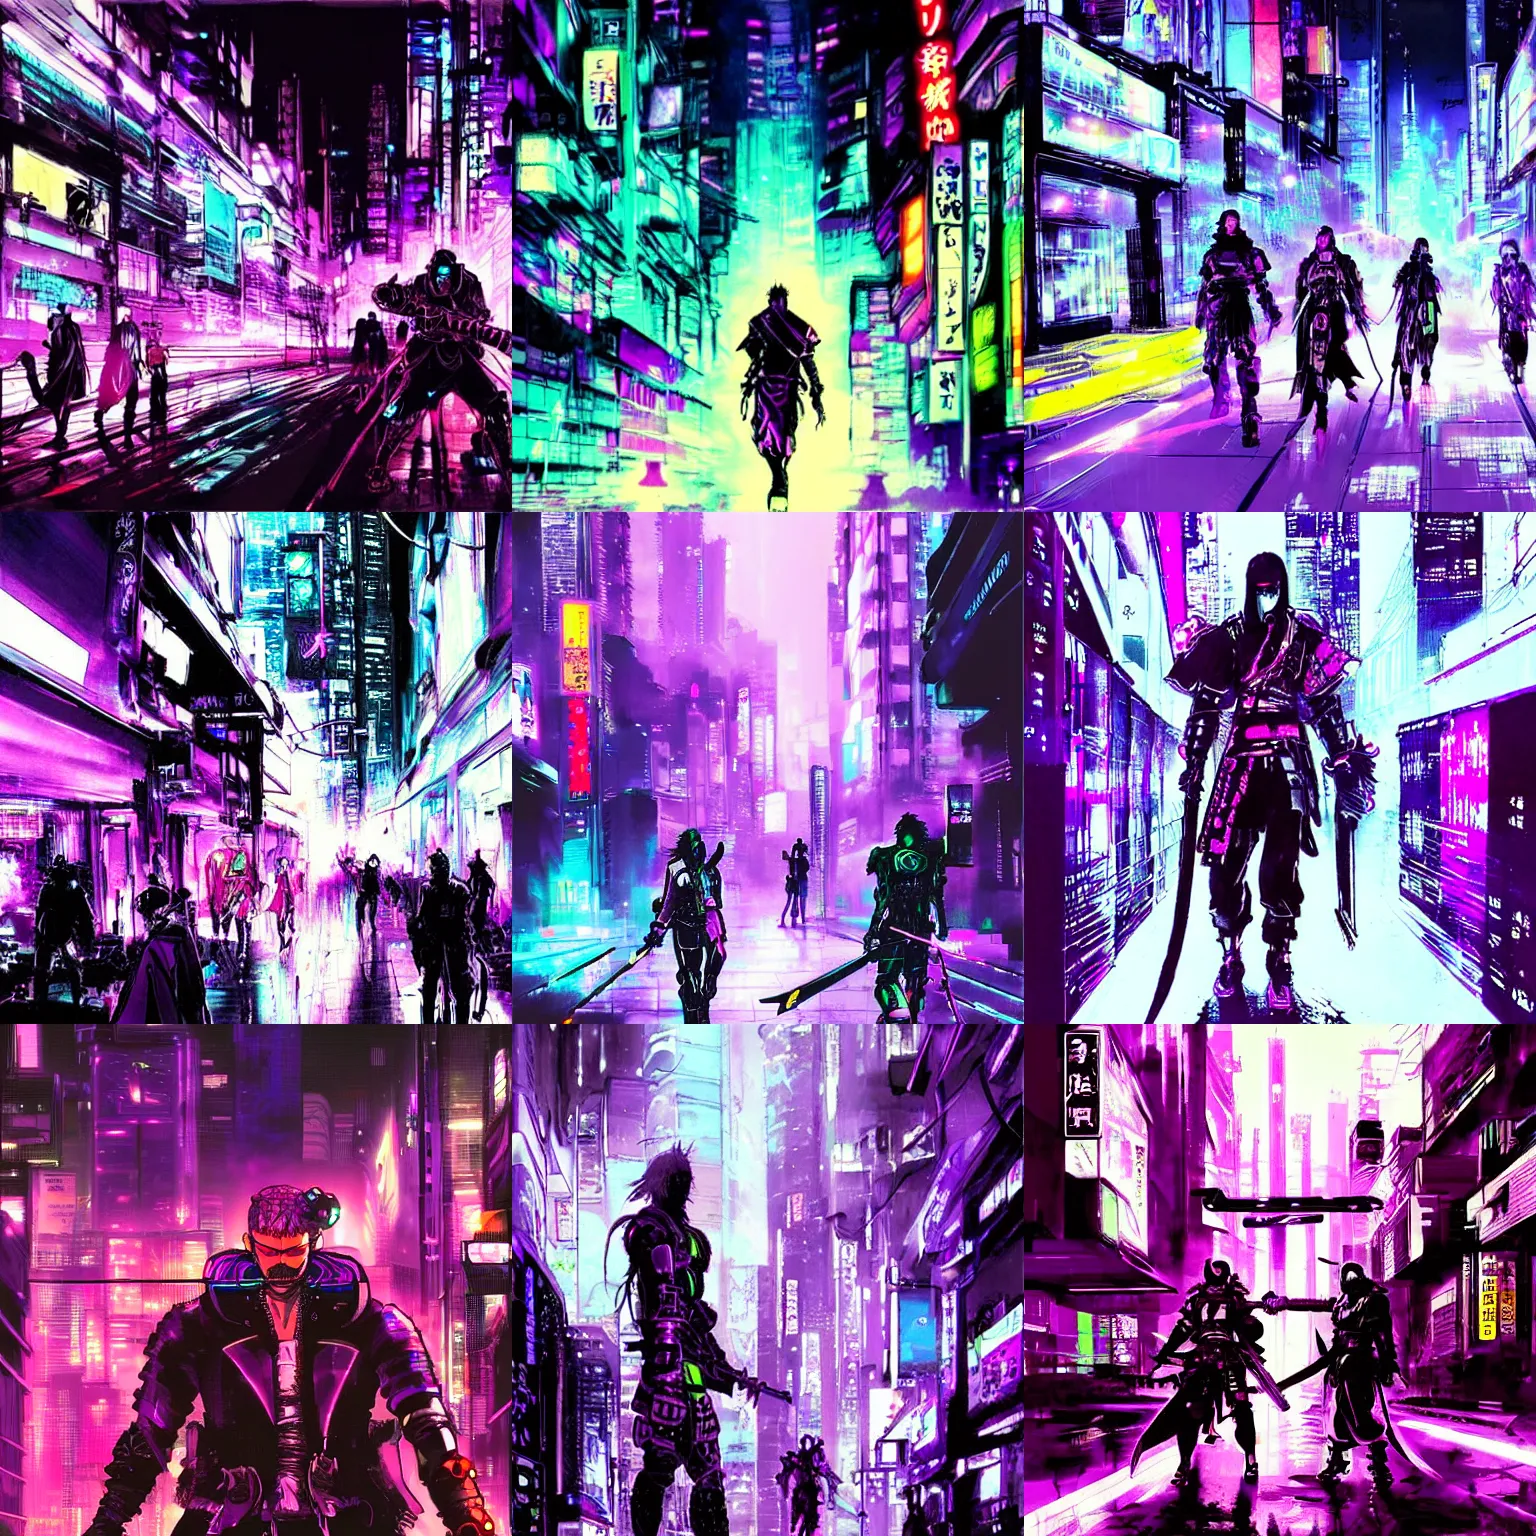 Prompt: cyberpunk samurai drawing their sword in a futuristic neon city night covered in purple steam, colourful painting by yoji shinkawa